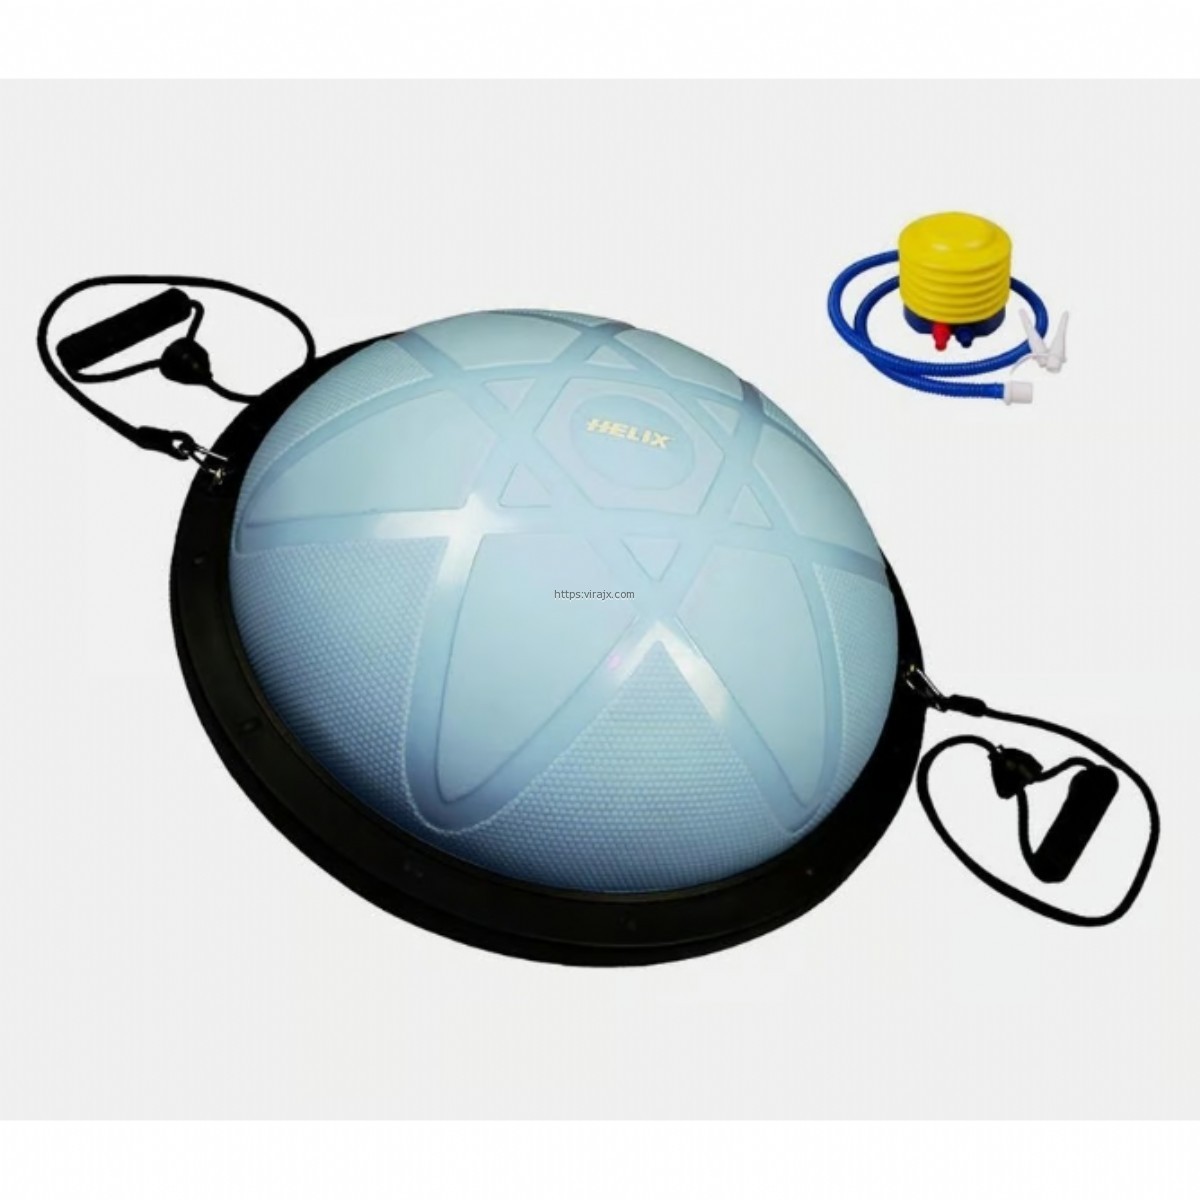 ANTRENMAN MALZEMELERİ | Helix Bosu Ball Topu Training Pompalı | Helix-bosu-ball1 |  | 